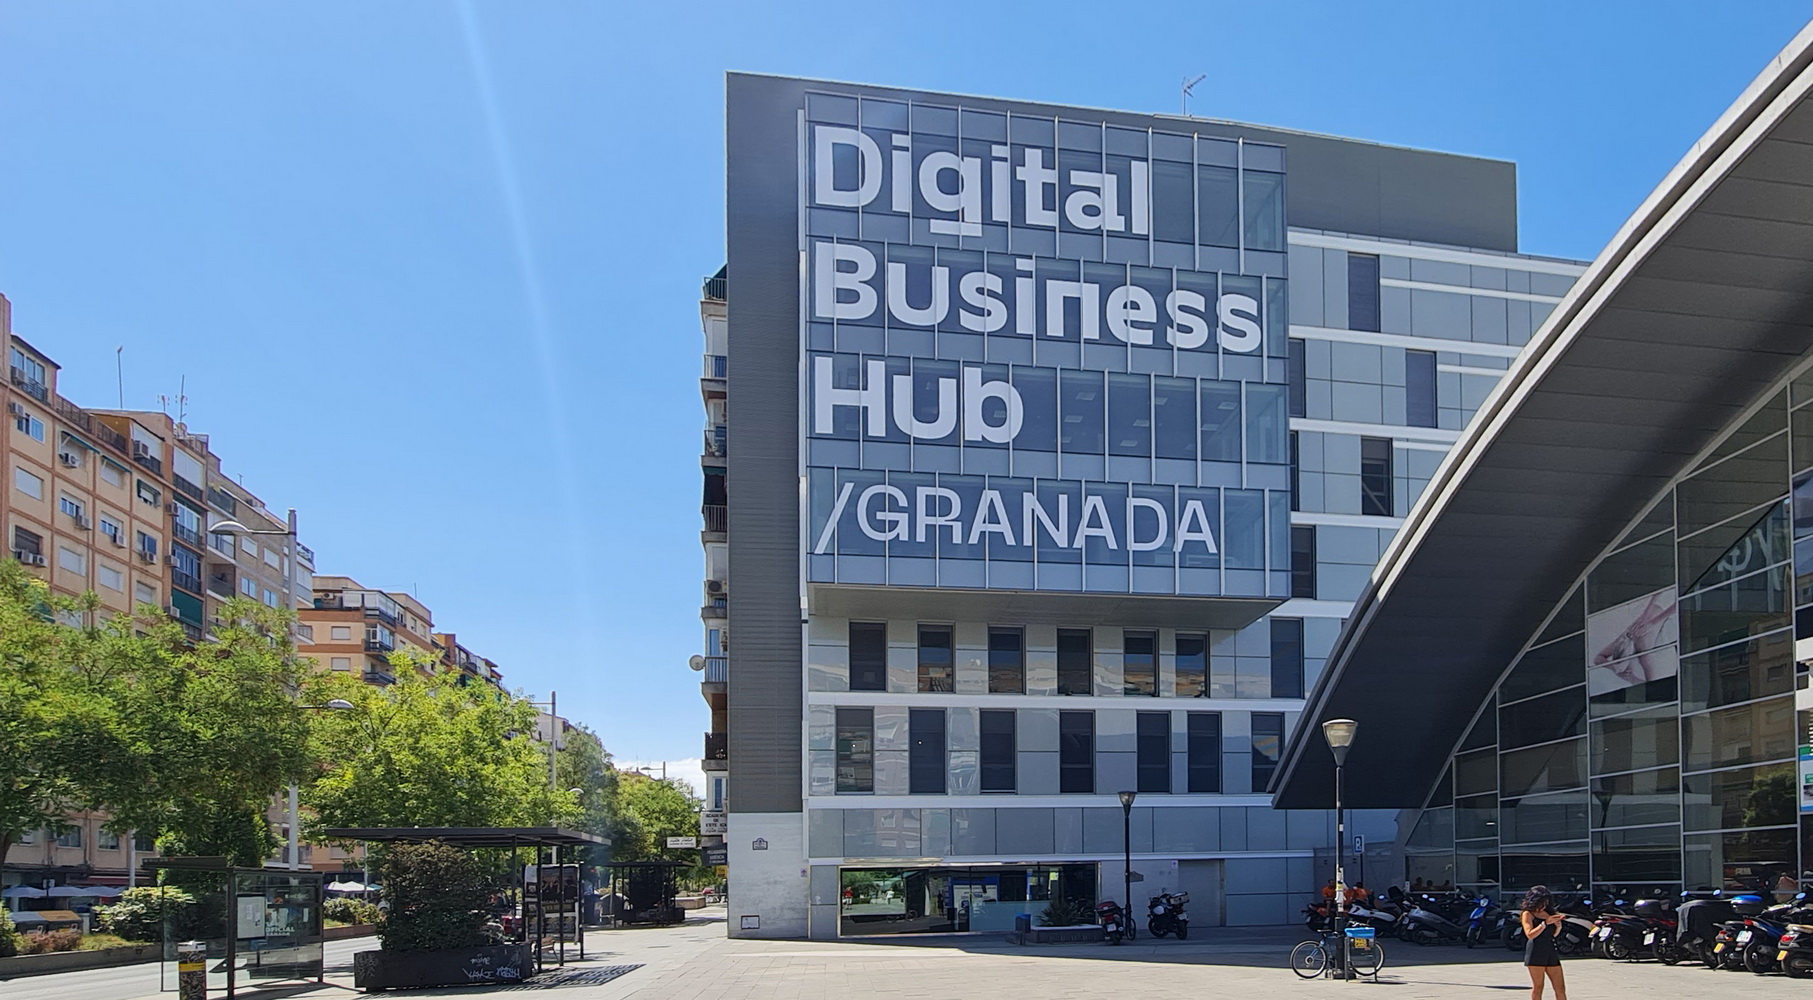 Cámara Granada abre la convocatoria pública de plazas para el Digital Business Hub Granada